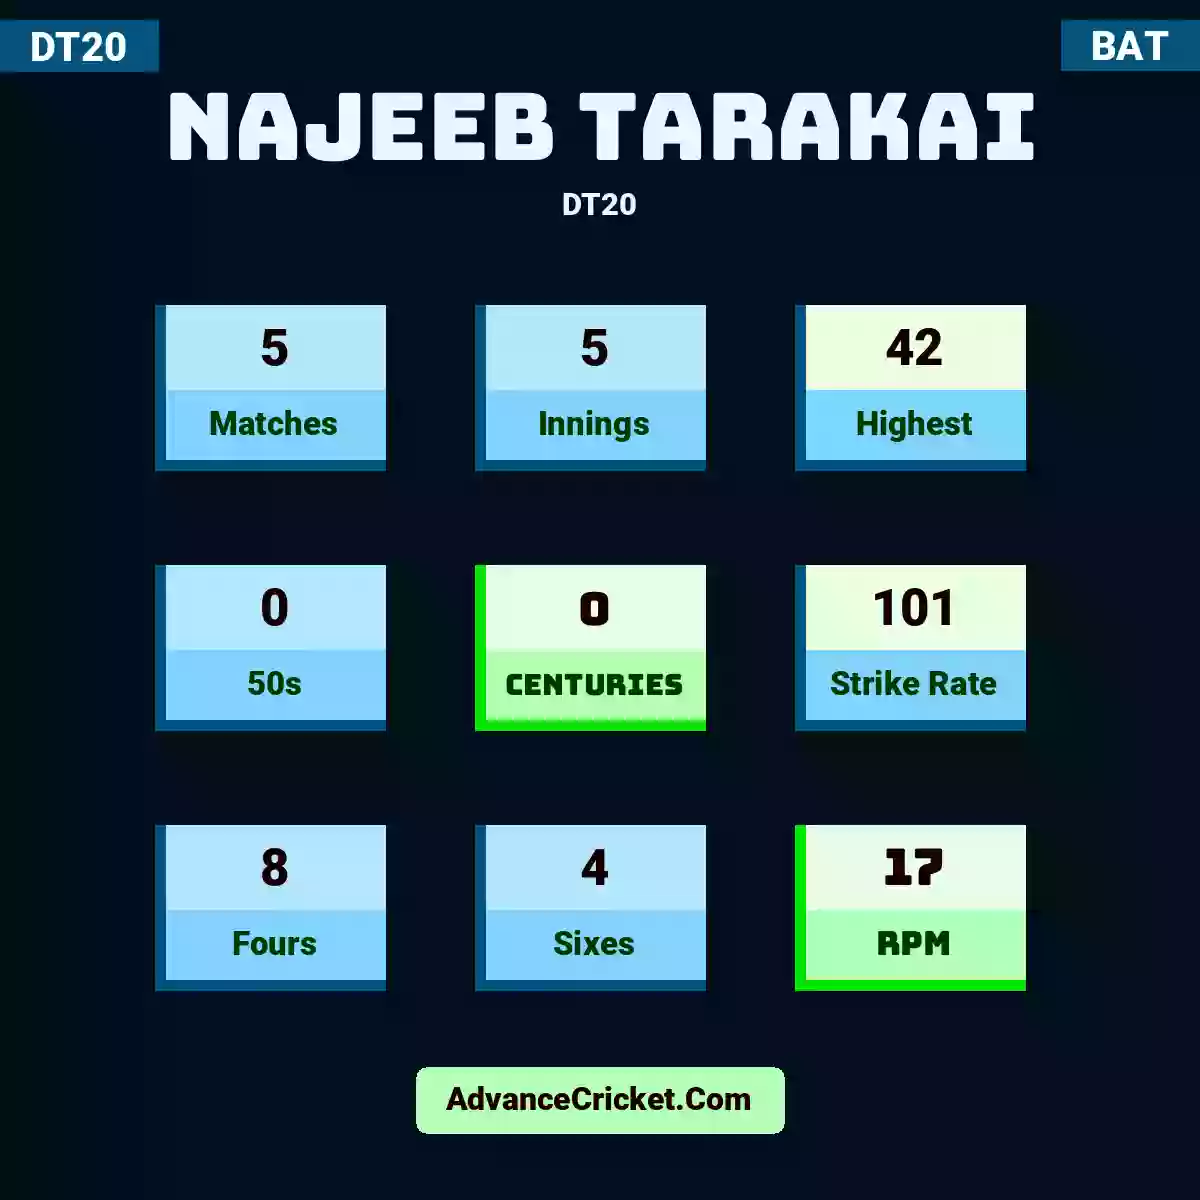 Najeeb Tarakai DT20 , Najeeb Tarakai played 5 matches, scored 42 runs as highest, 0 half-centuries, and 0 centuries, with a strike rate of 101. N.Tarakai hit 8 fours and 4 sixes, with an RPM of 17.